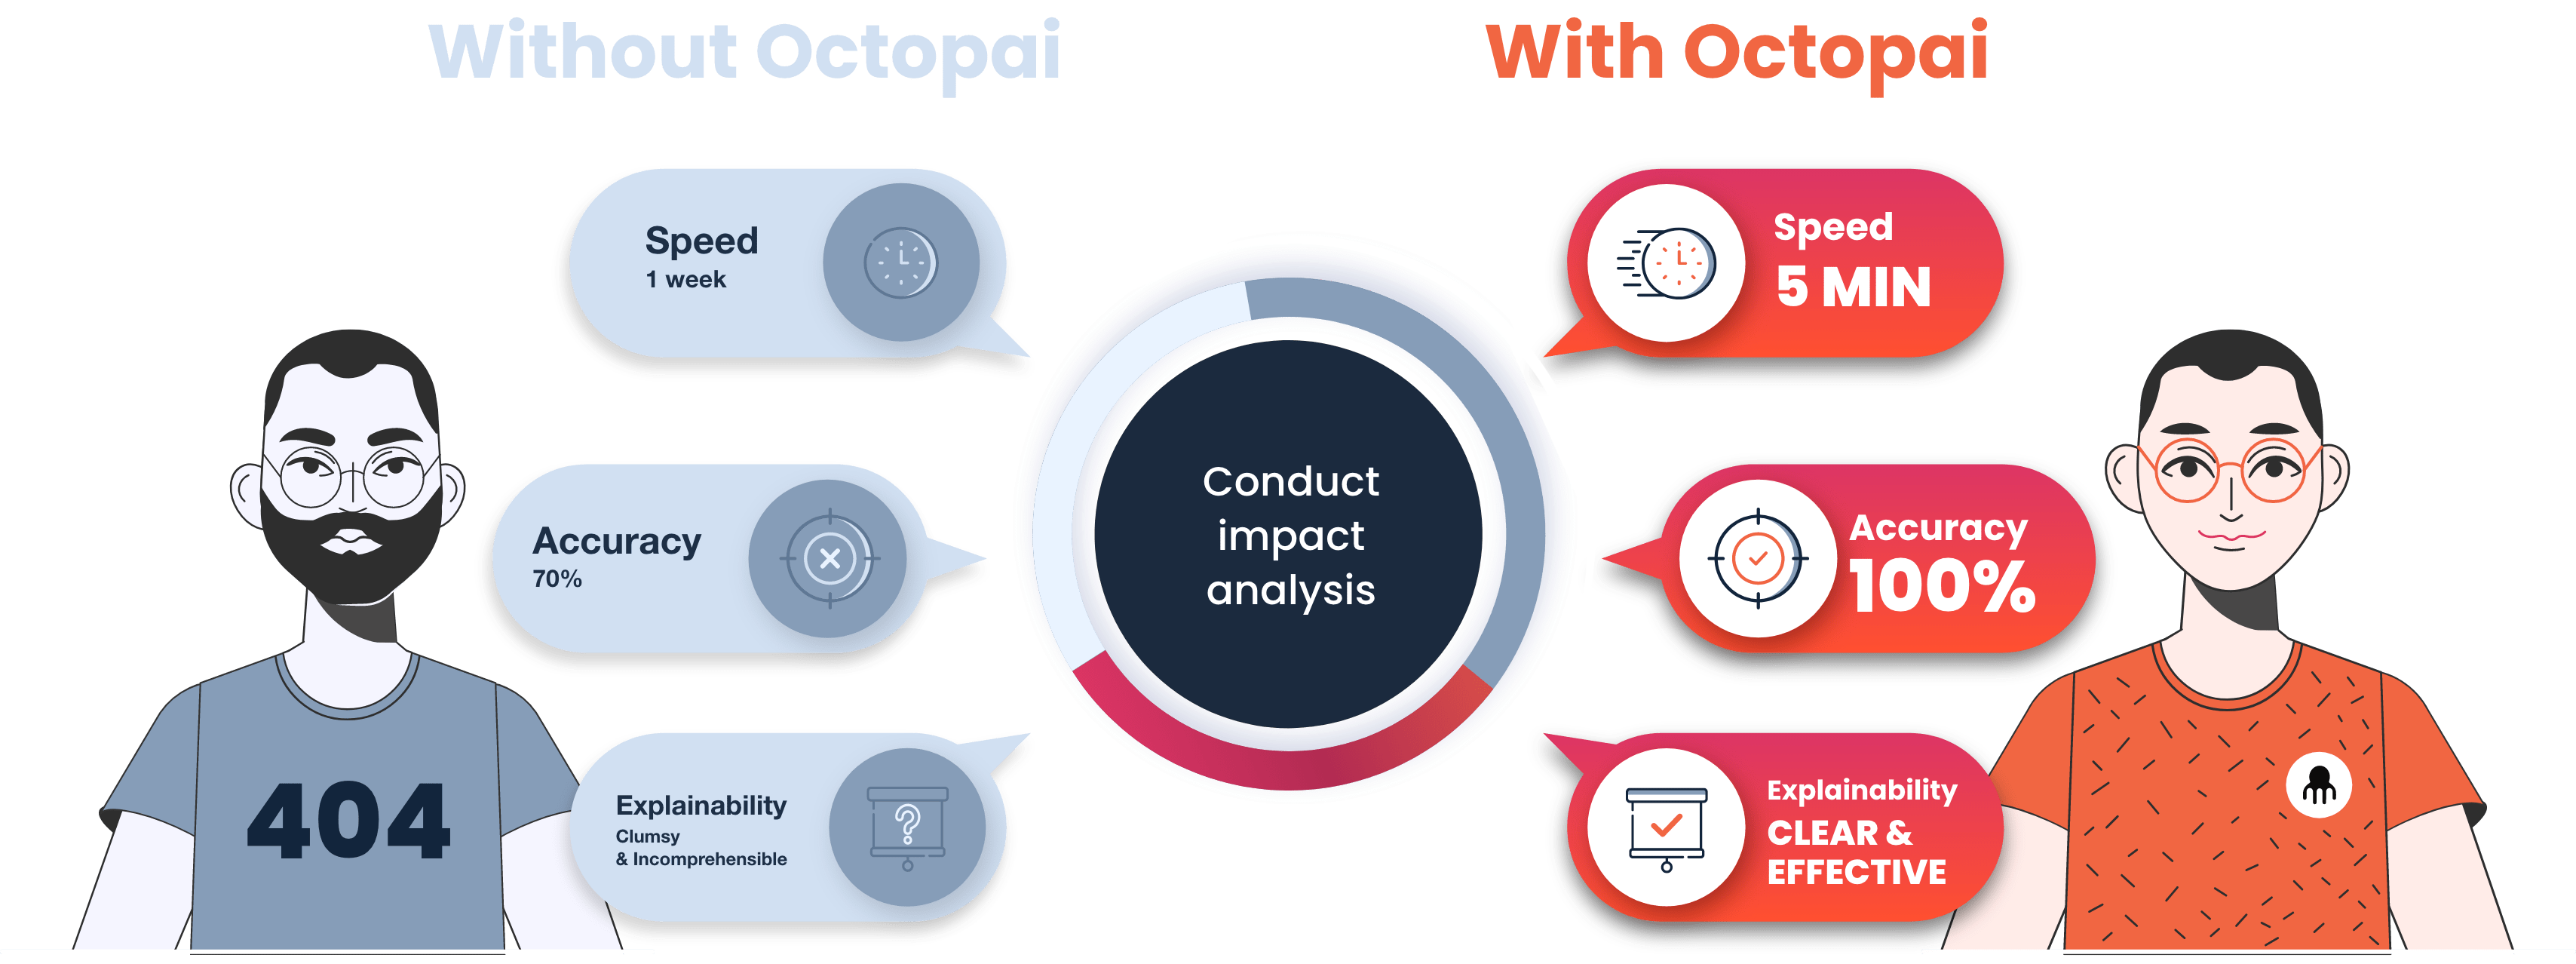 Conduct impact analysis